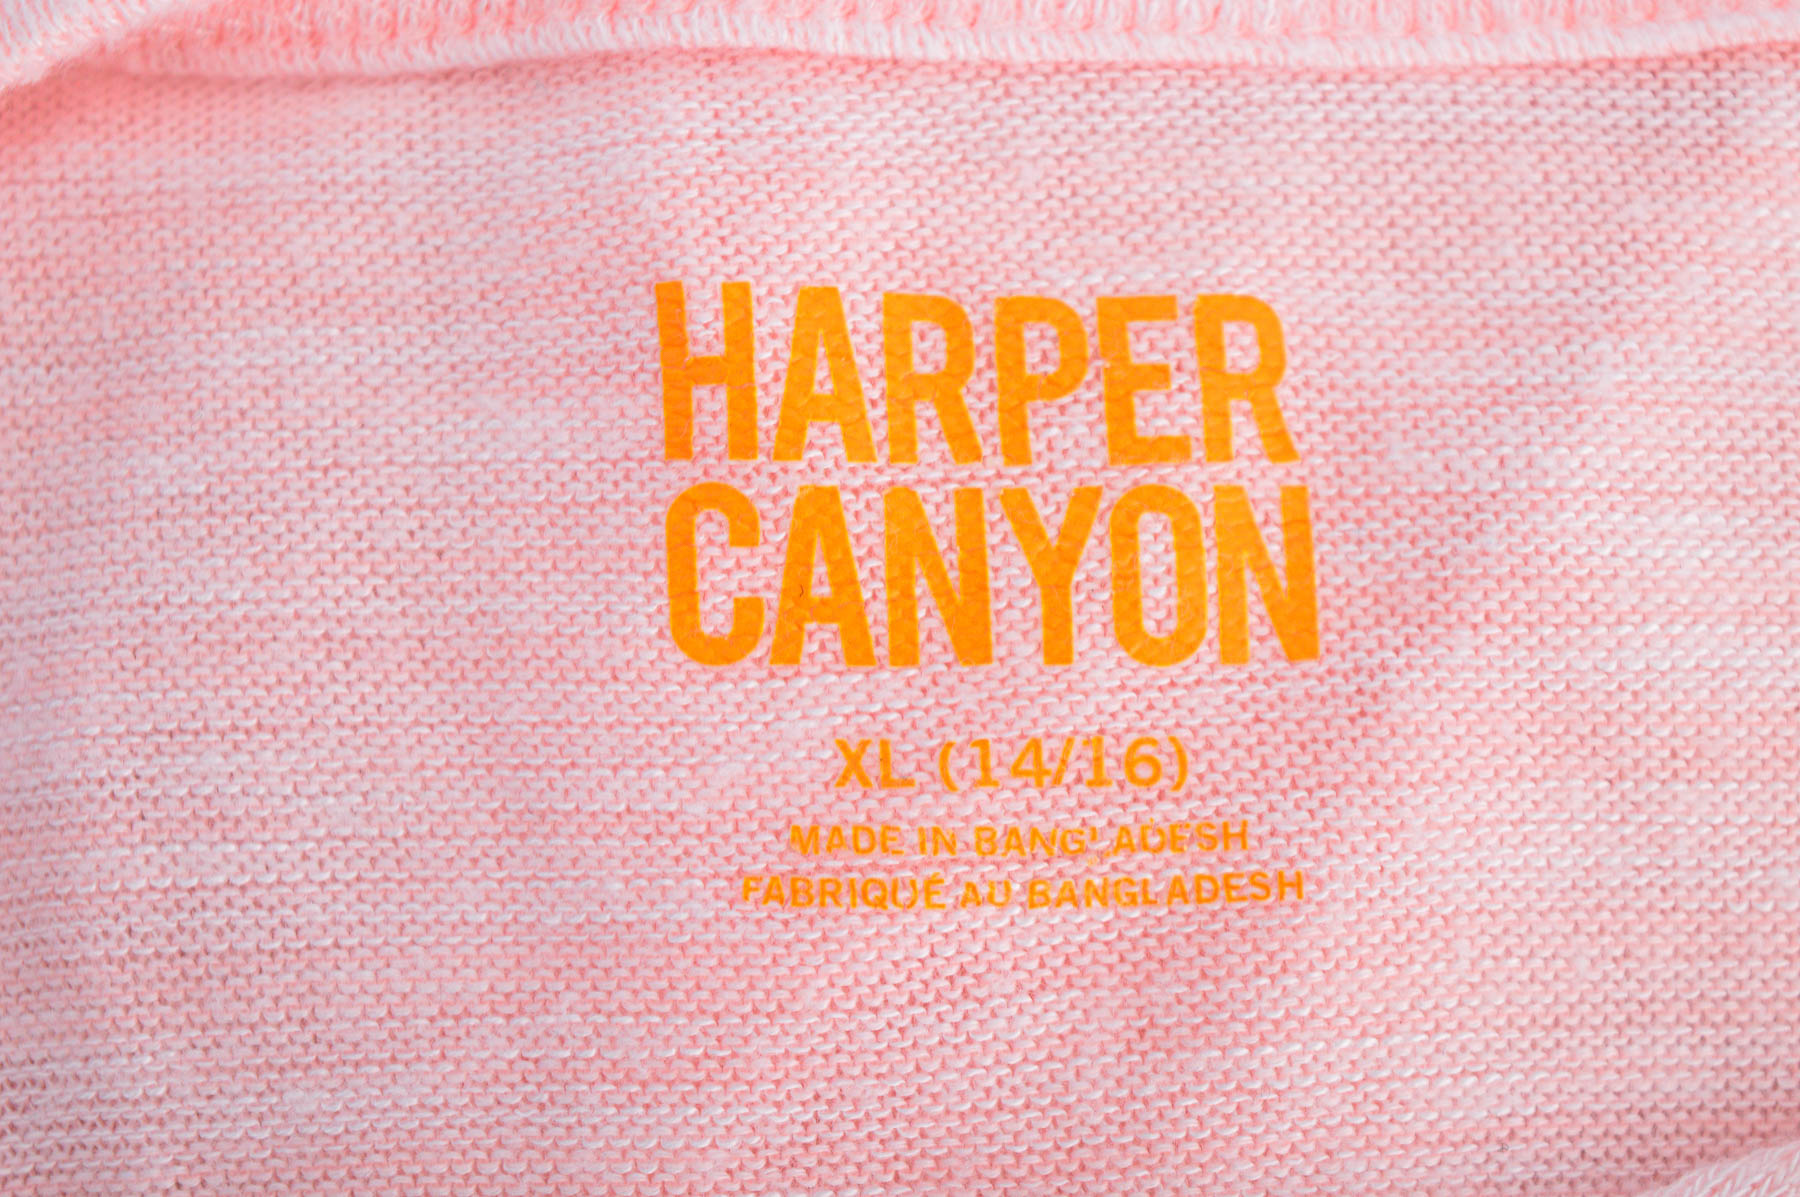 Пуловер за момиче - Harper Canyon - 2